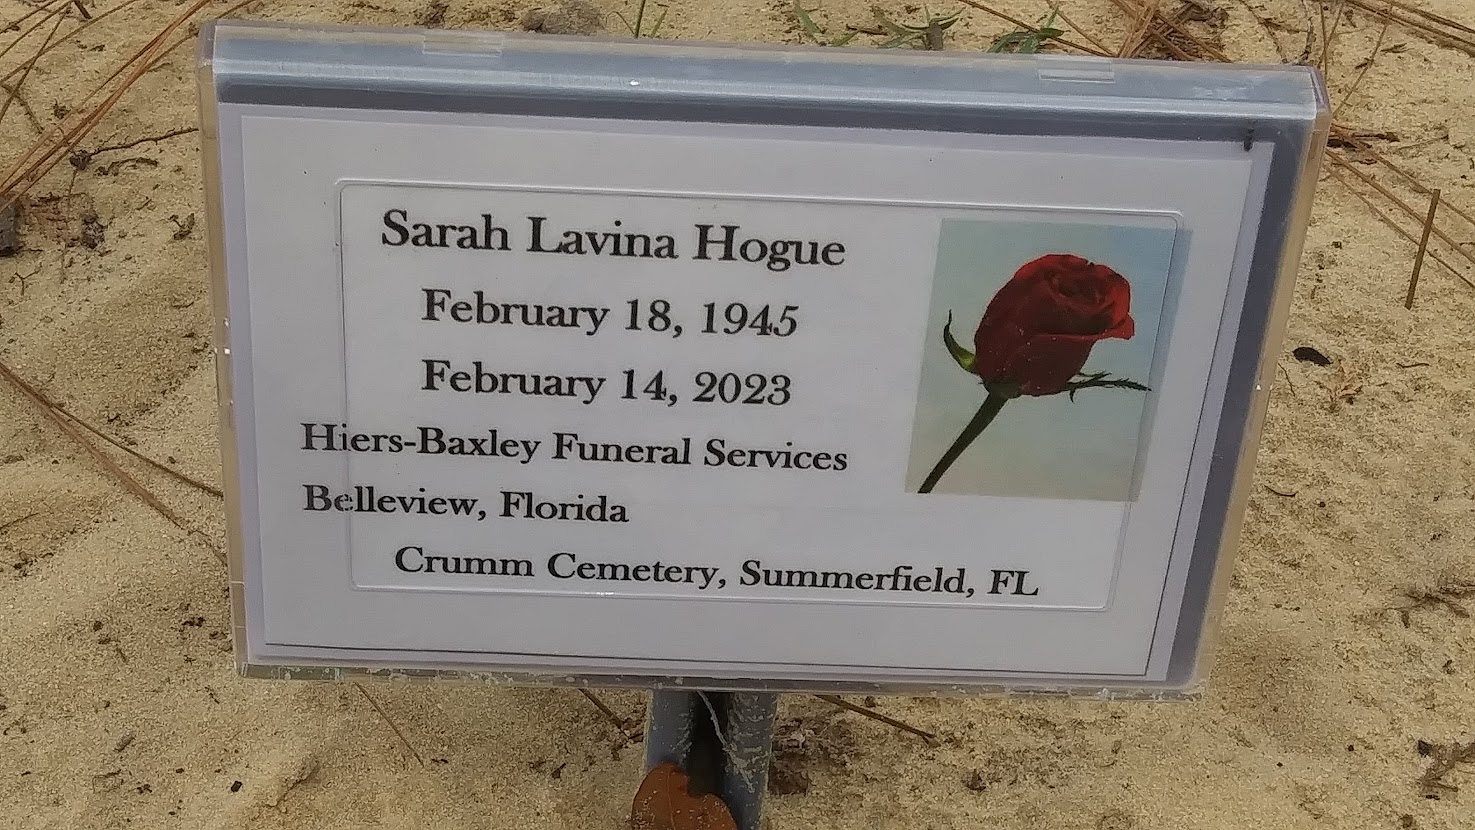 Headstone for Hogue, Sarah Lavina